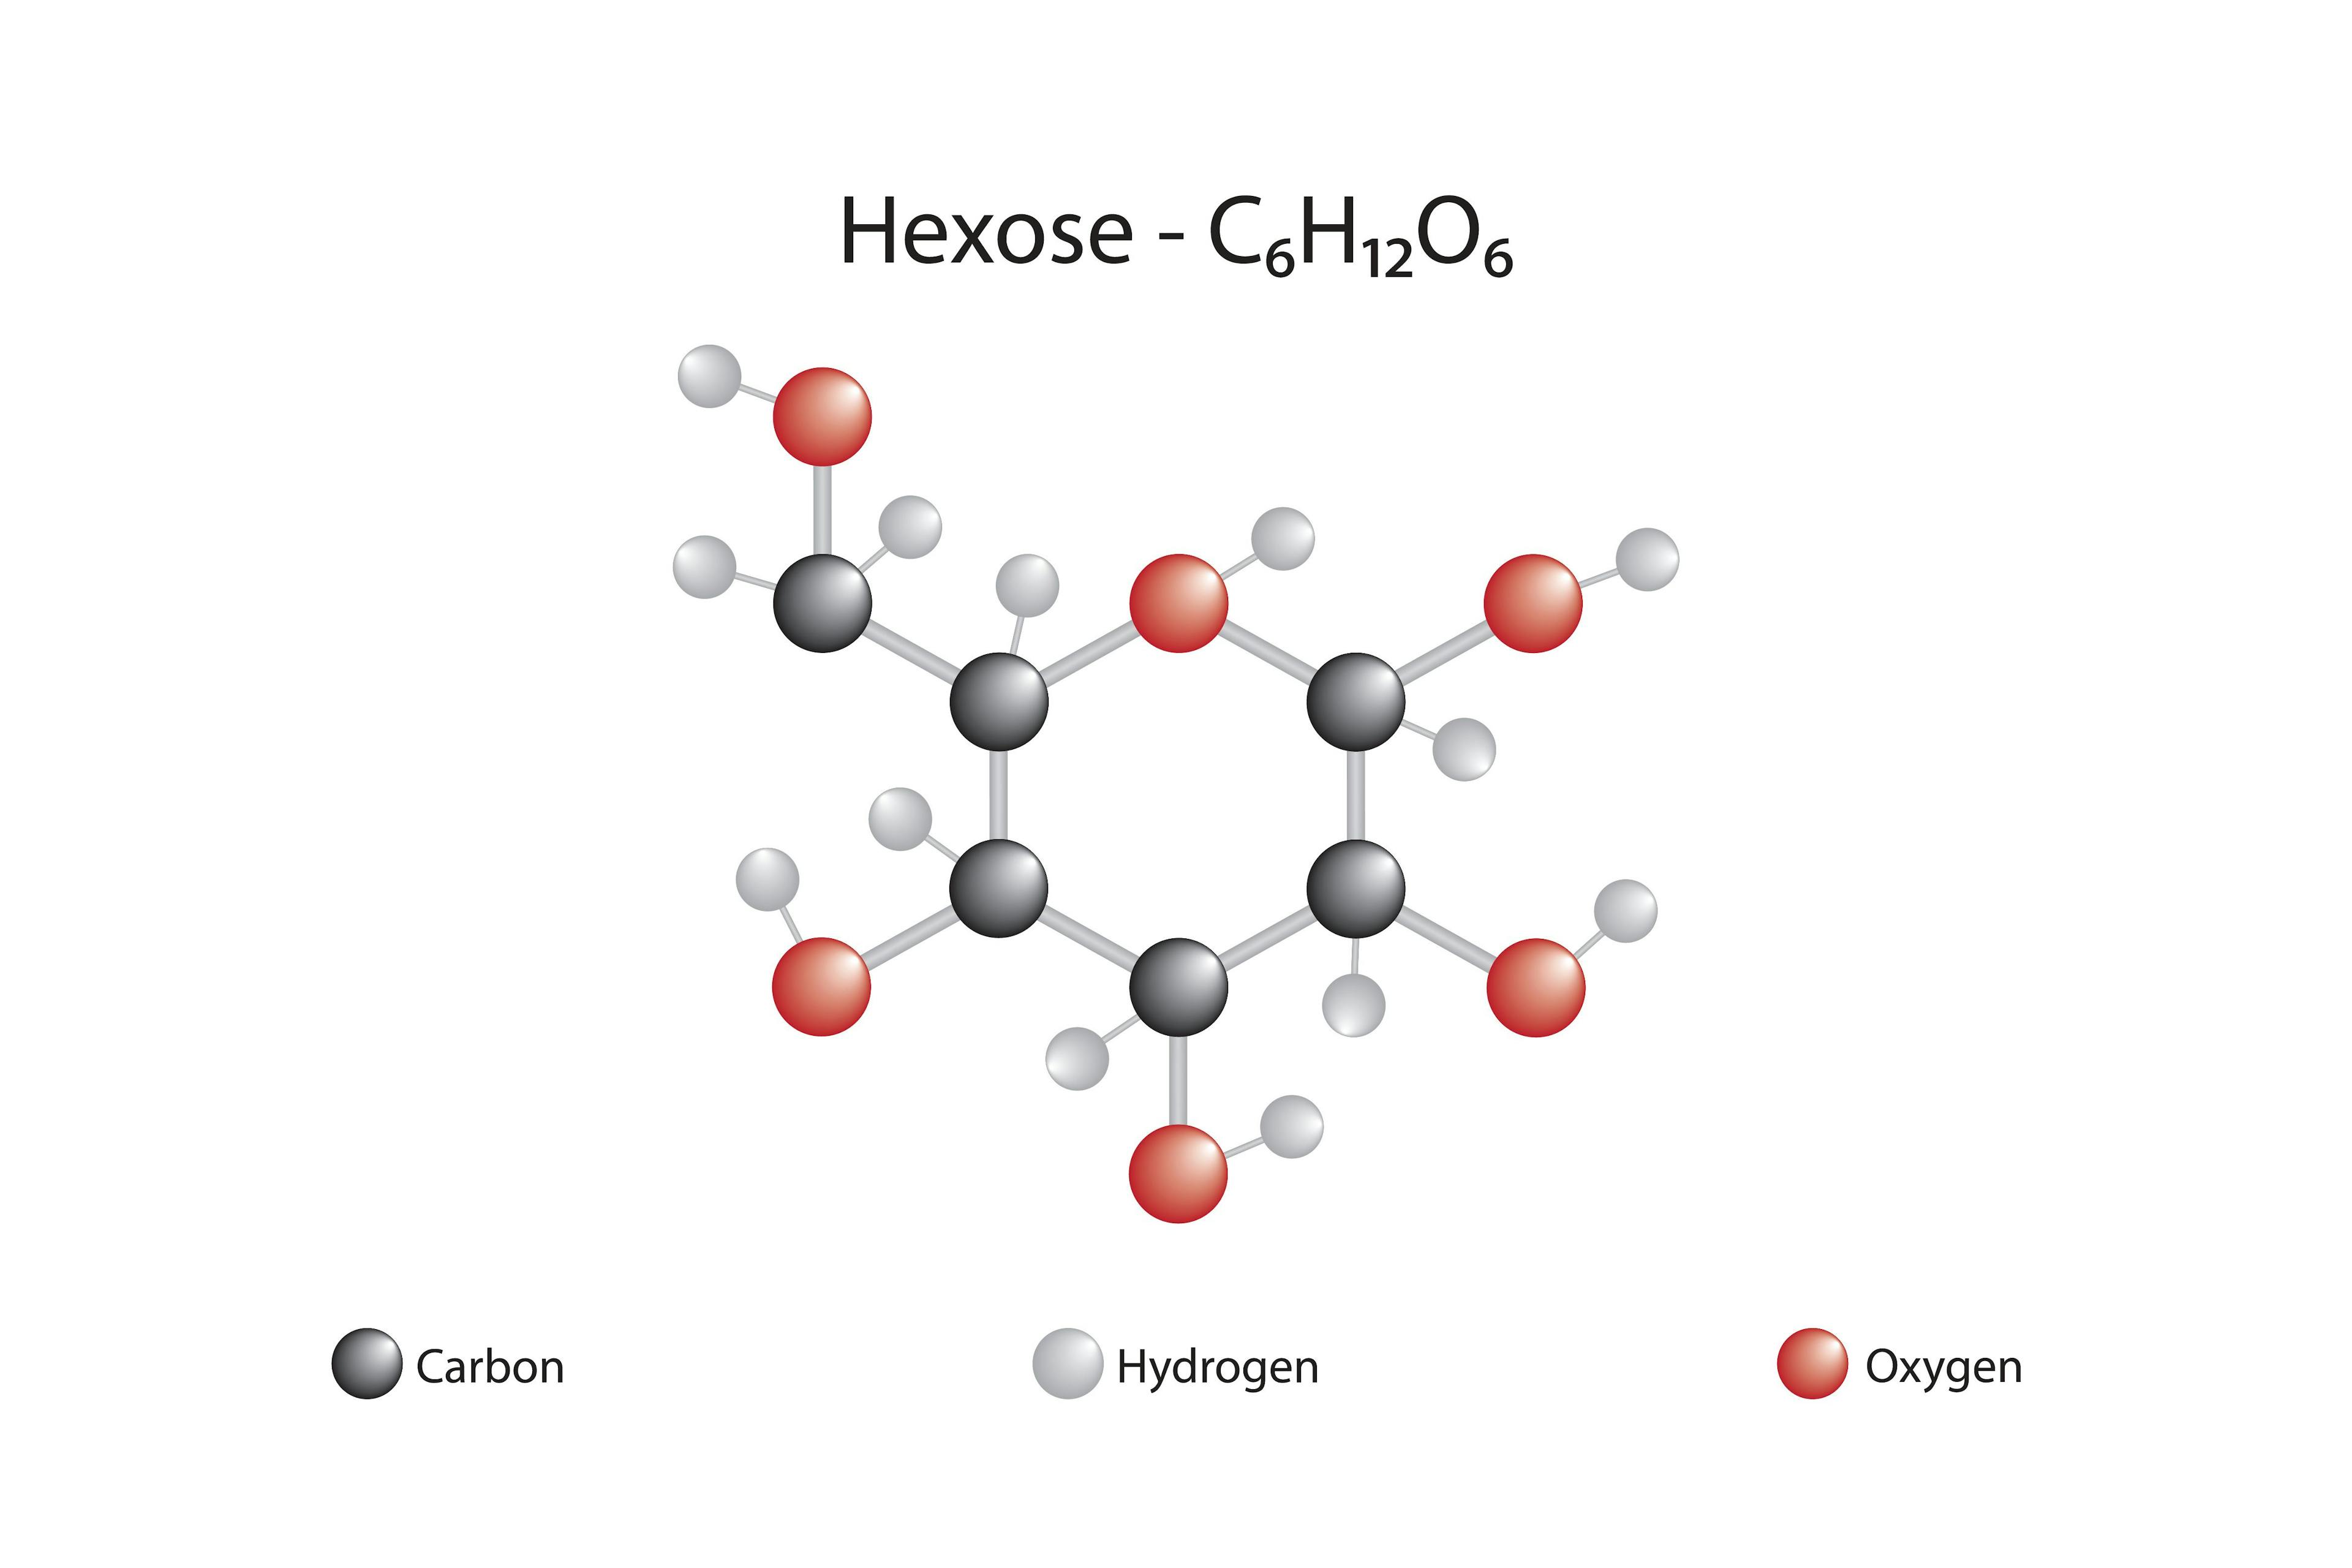 Molecular formula of hexose | Image credit: Firat - stock.adobe.com